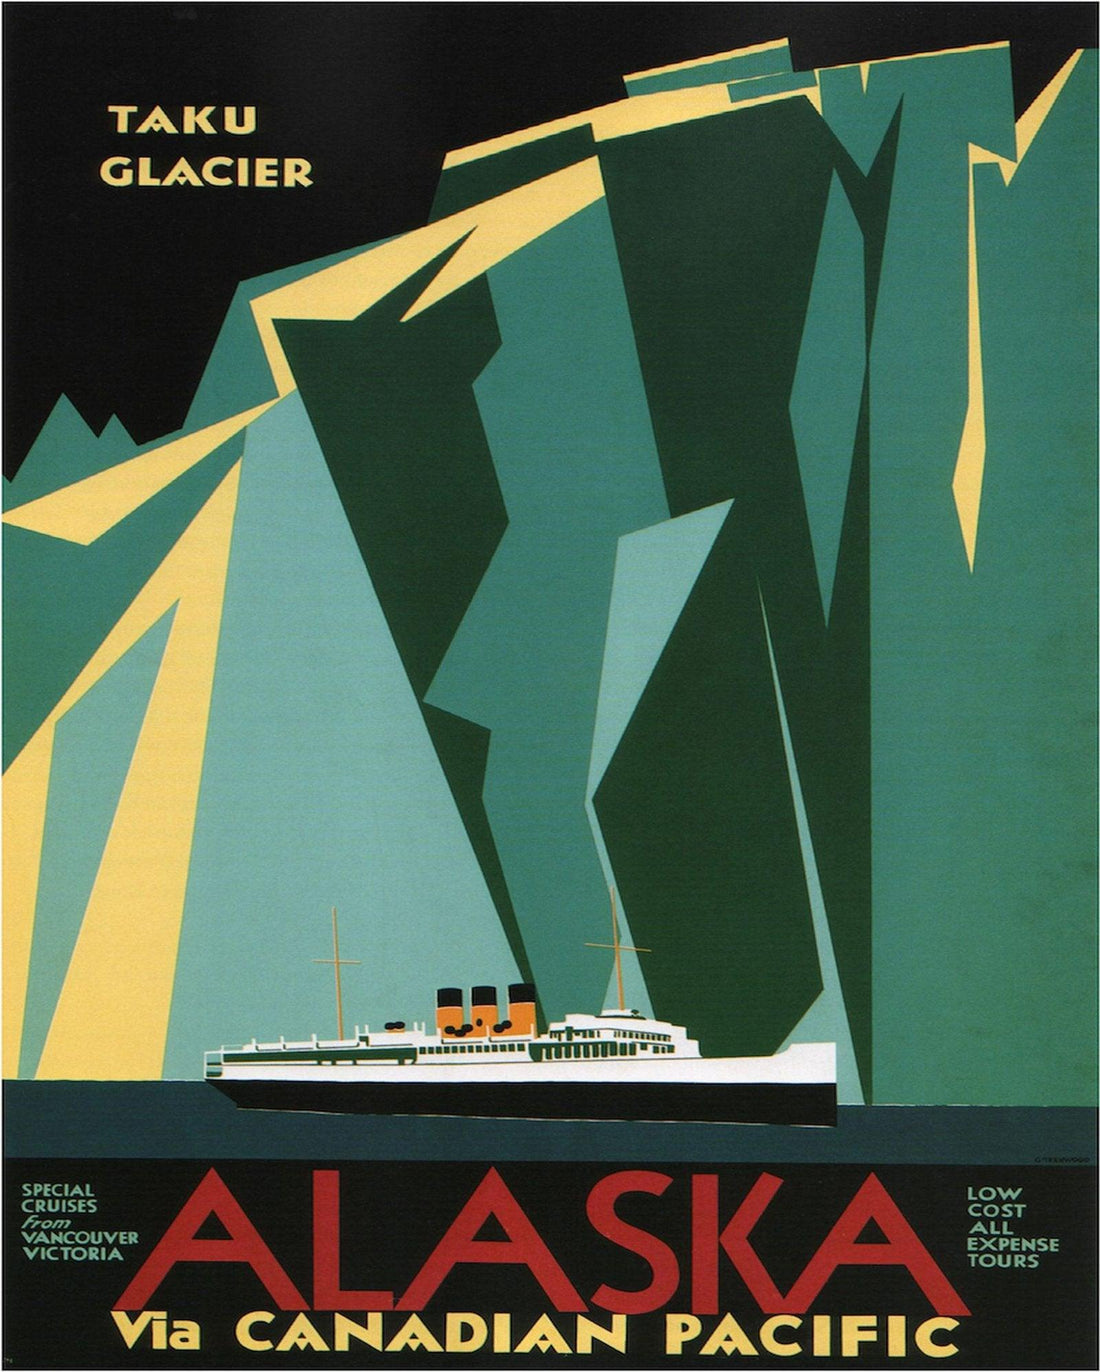 Vintage Metal Sign - Retro Advertising - Alaska Via Canadian Pacific Travel - £27.99 - Retro Advertising 